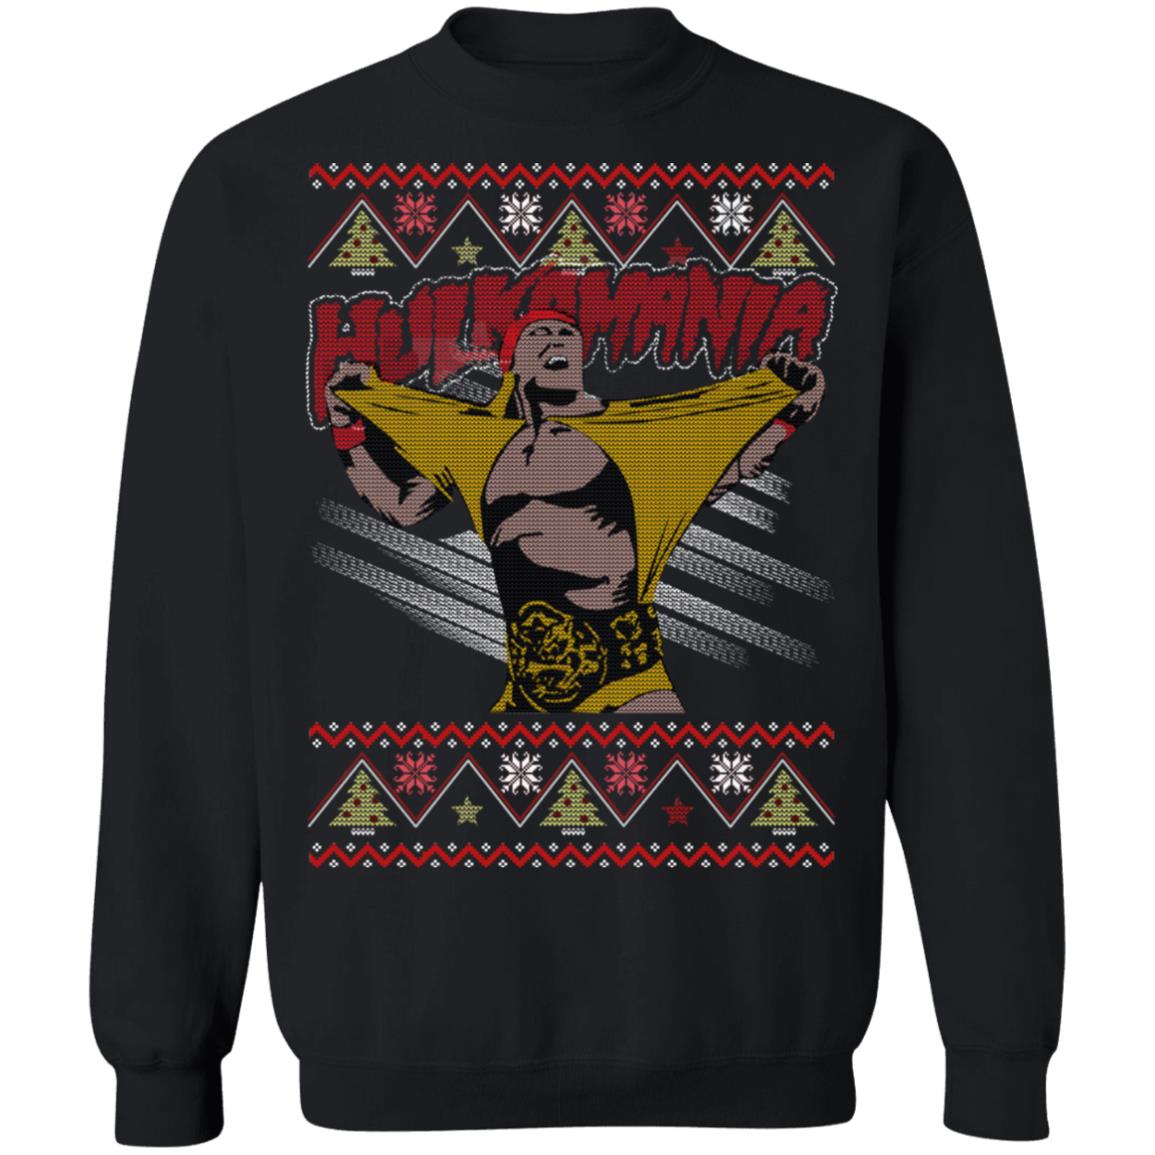 Hulkamania Hulk Hogan Pro Wrestling Christmas Shirt